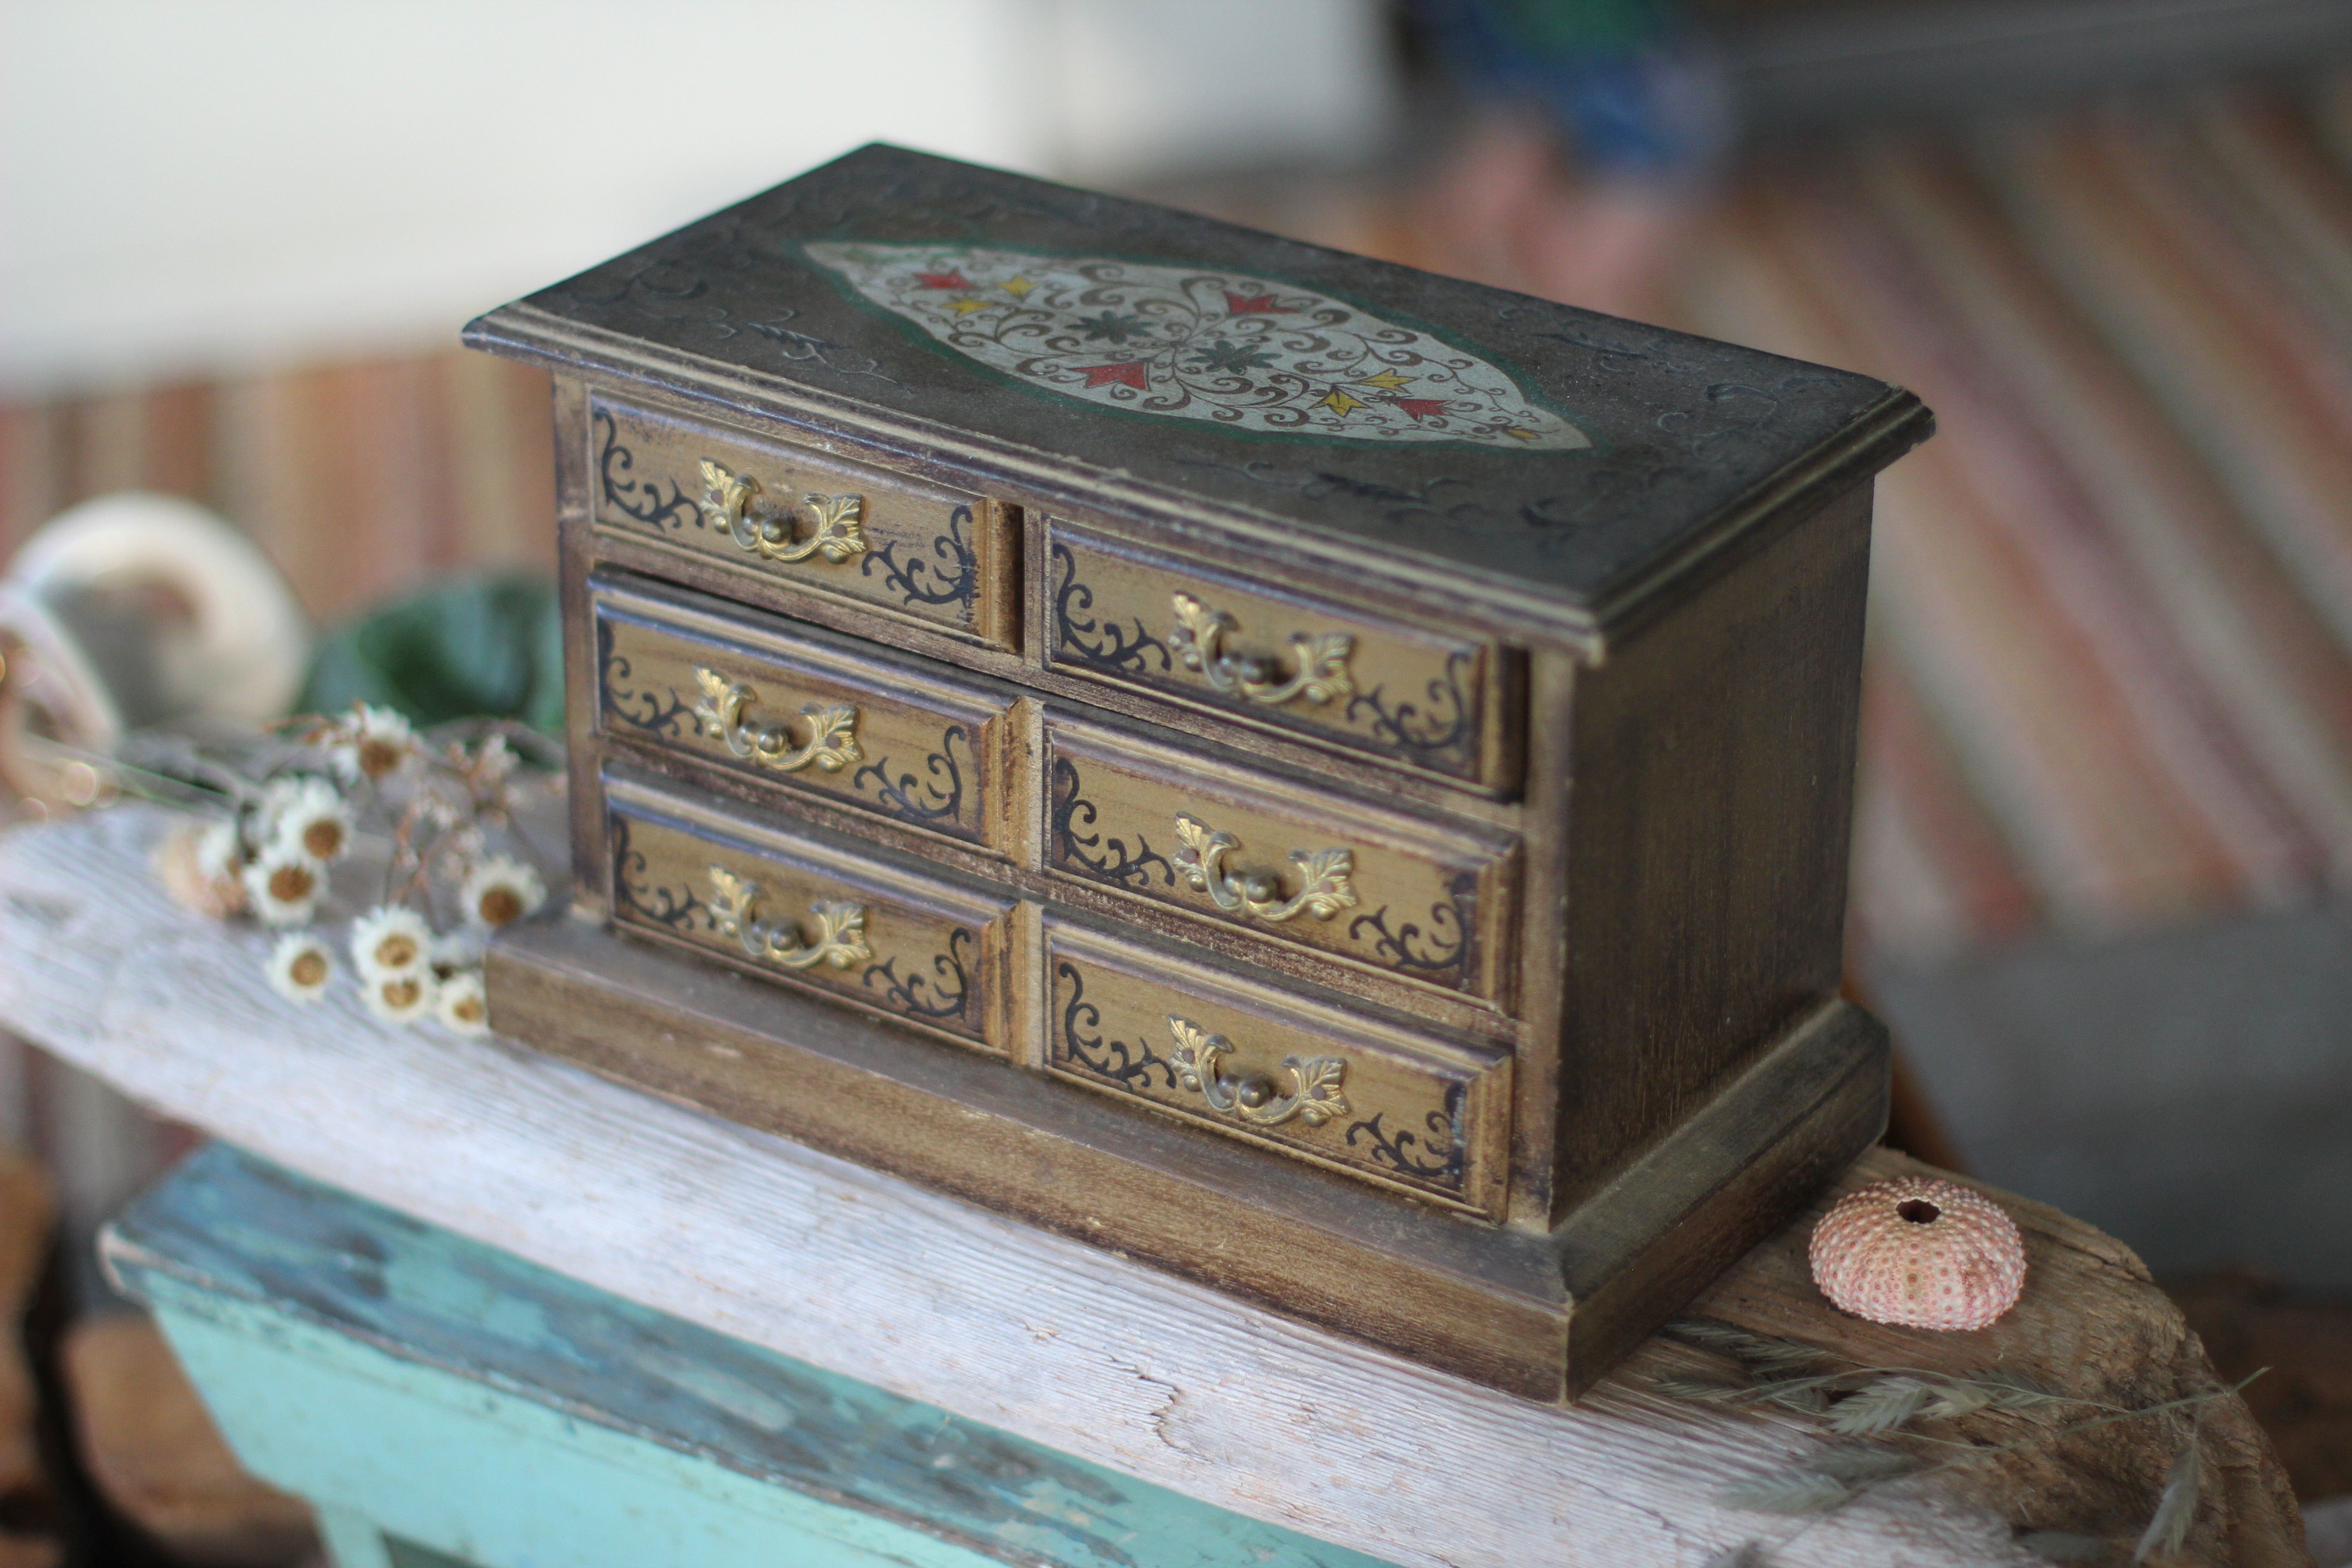 Wood Jewelry Box + Drawers